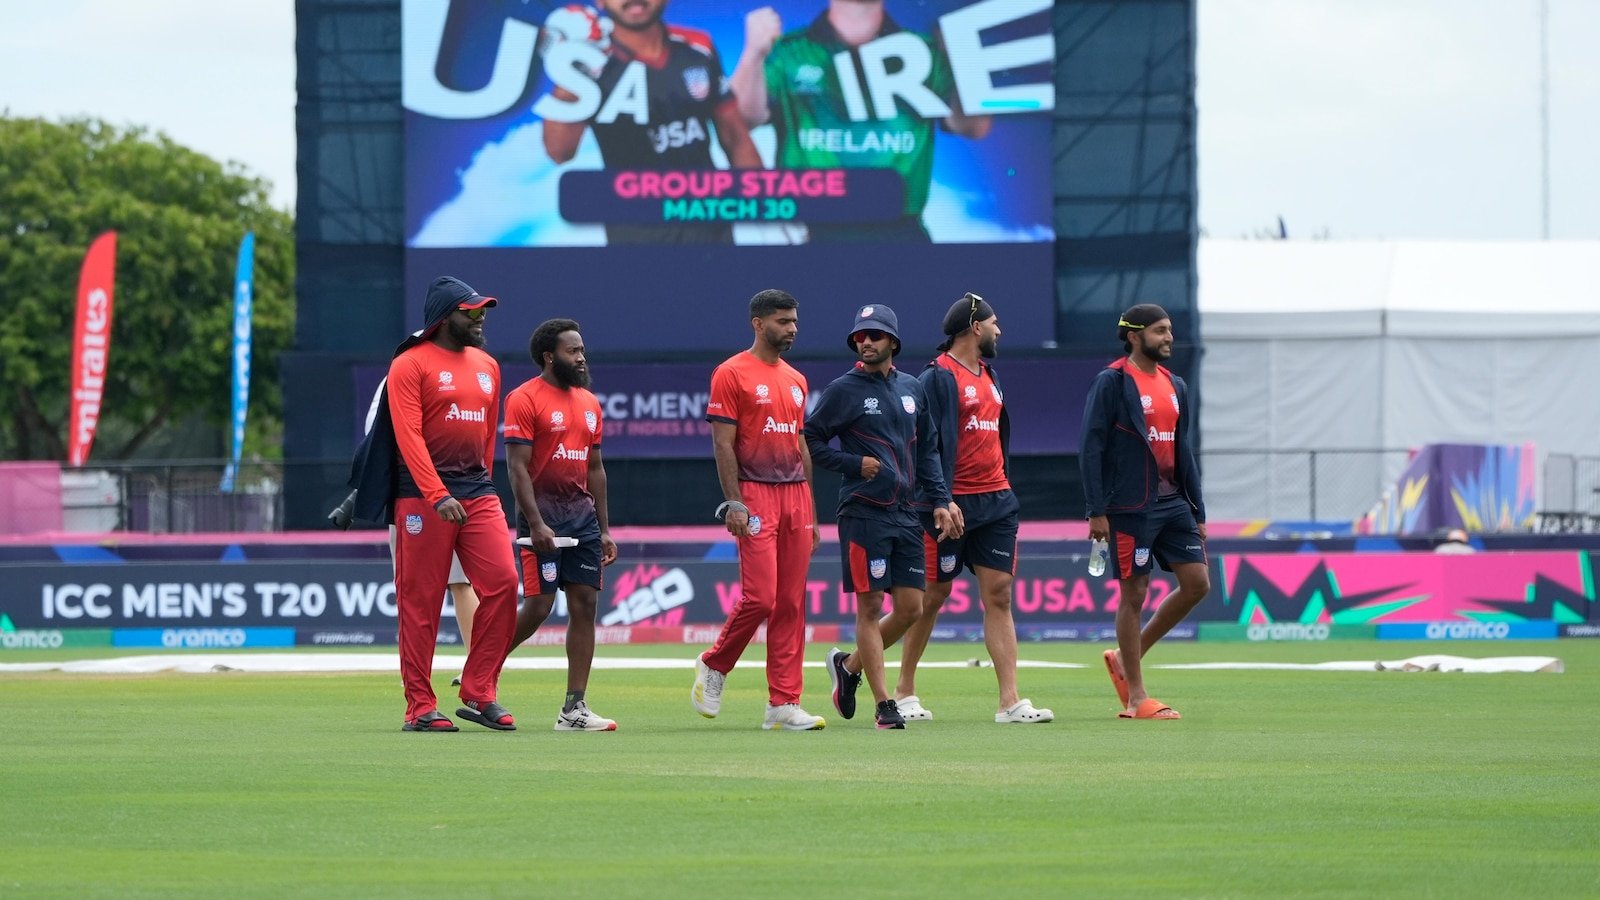 US cricket team advances to second round in Twenty20 World Cup debut